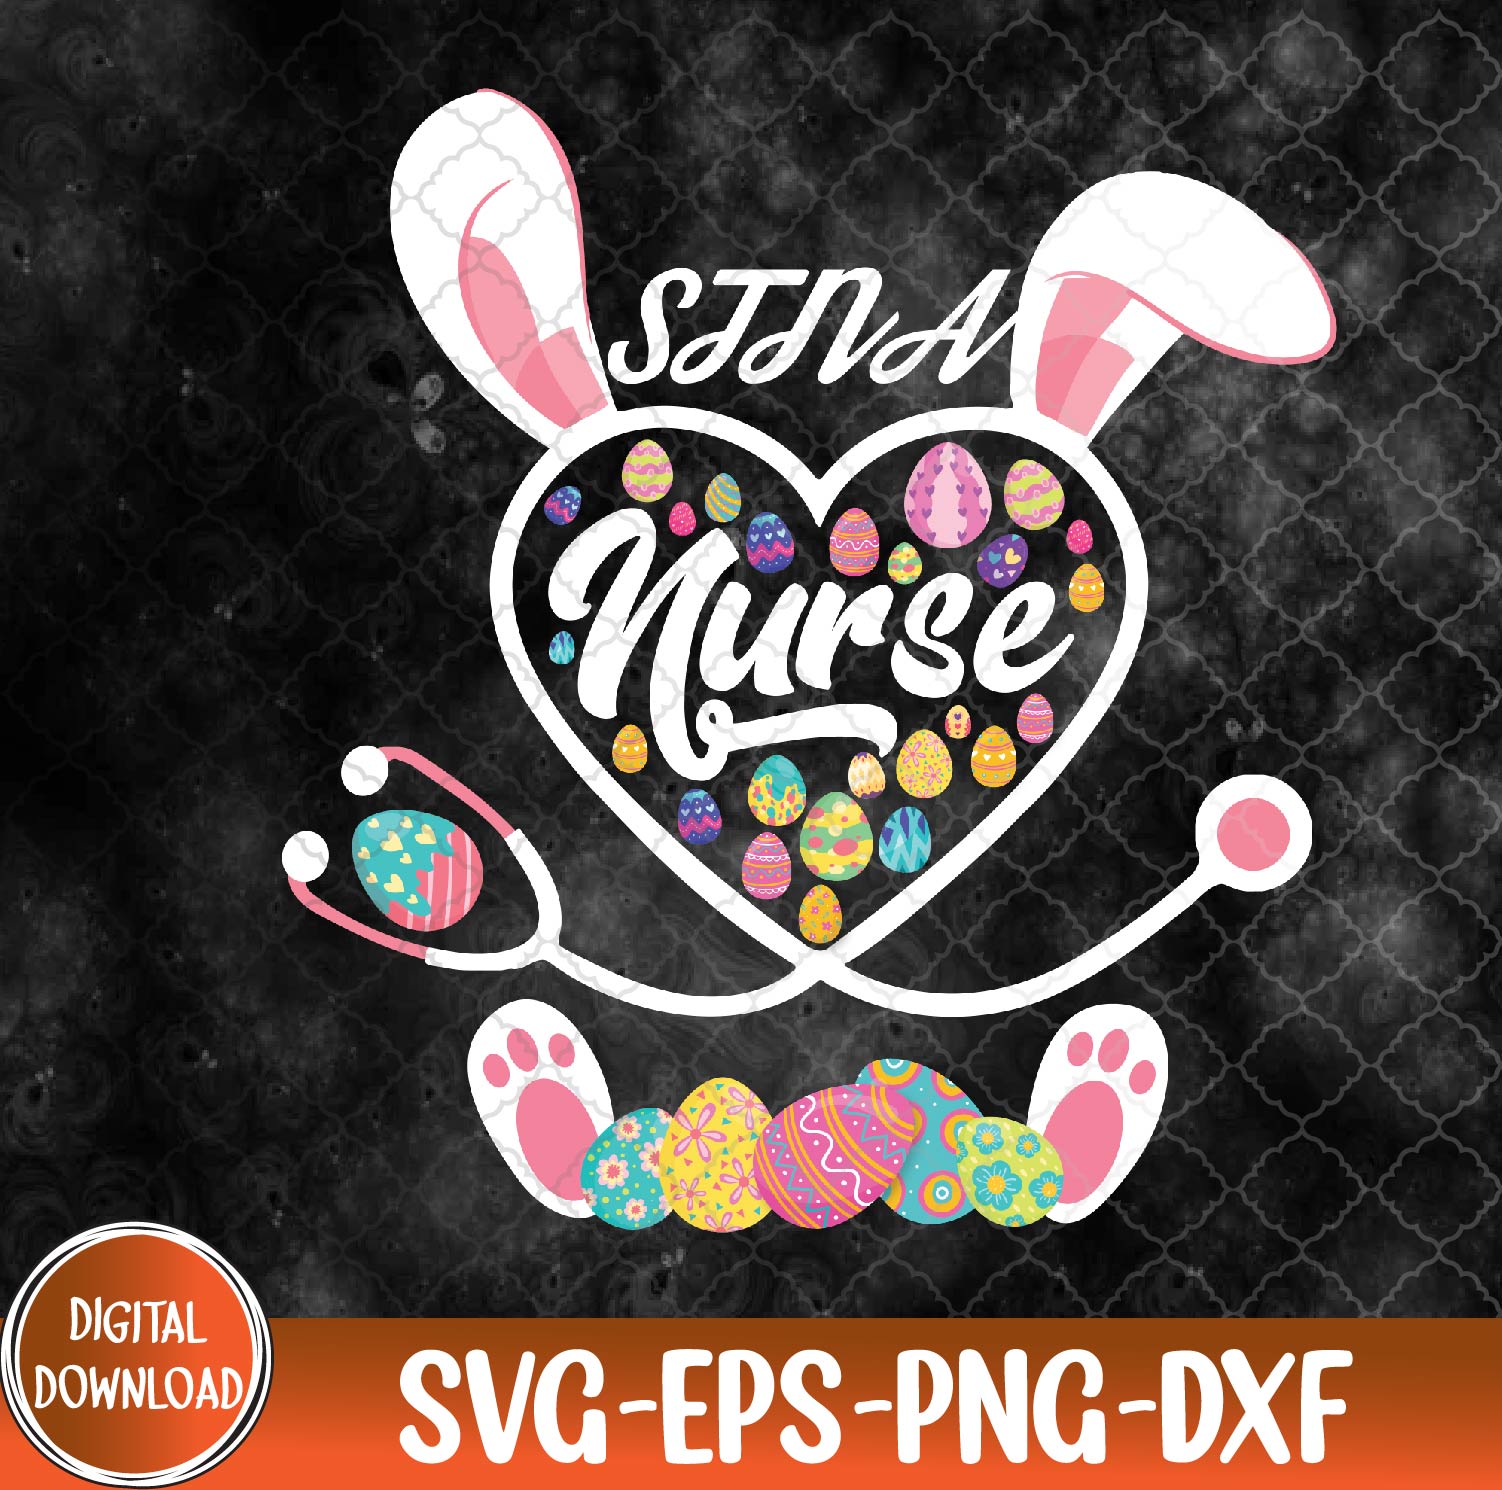 WTMNEW9file 09 6 Stethoscope Heart STNA Nurse Easter Bunny STNA Nurse Svg, Eps, Png, Dxf